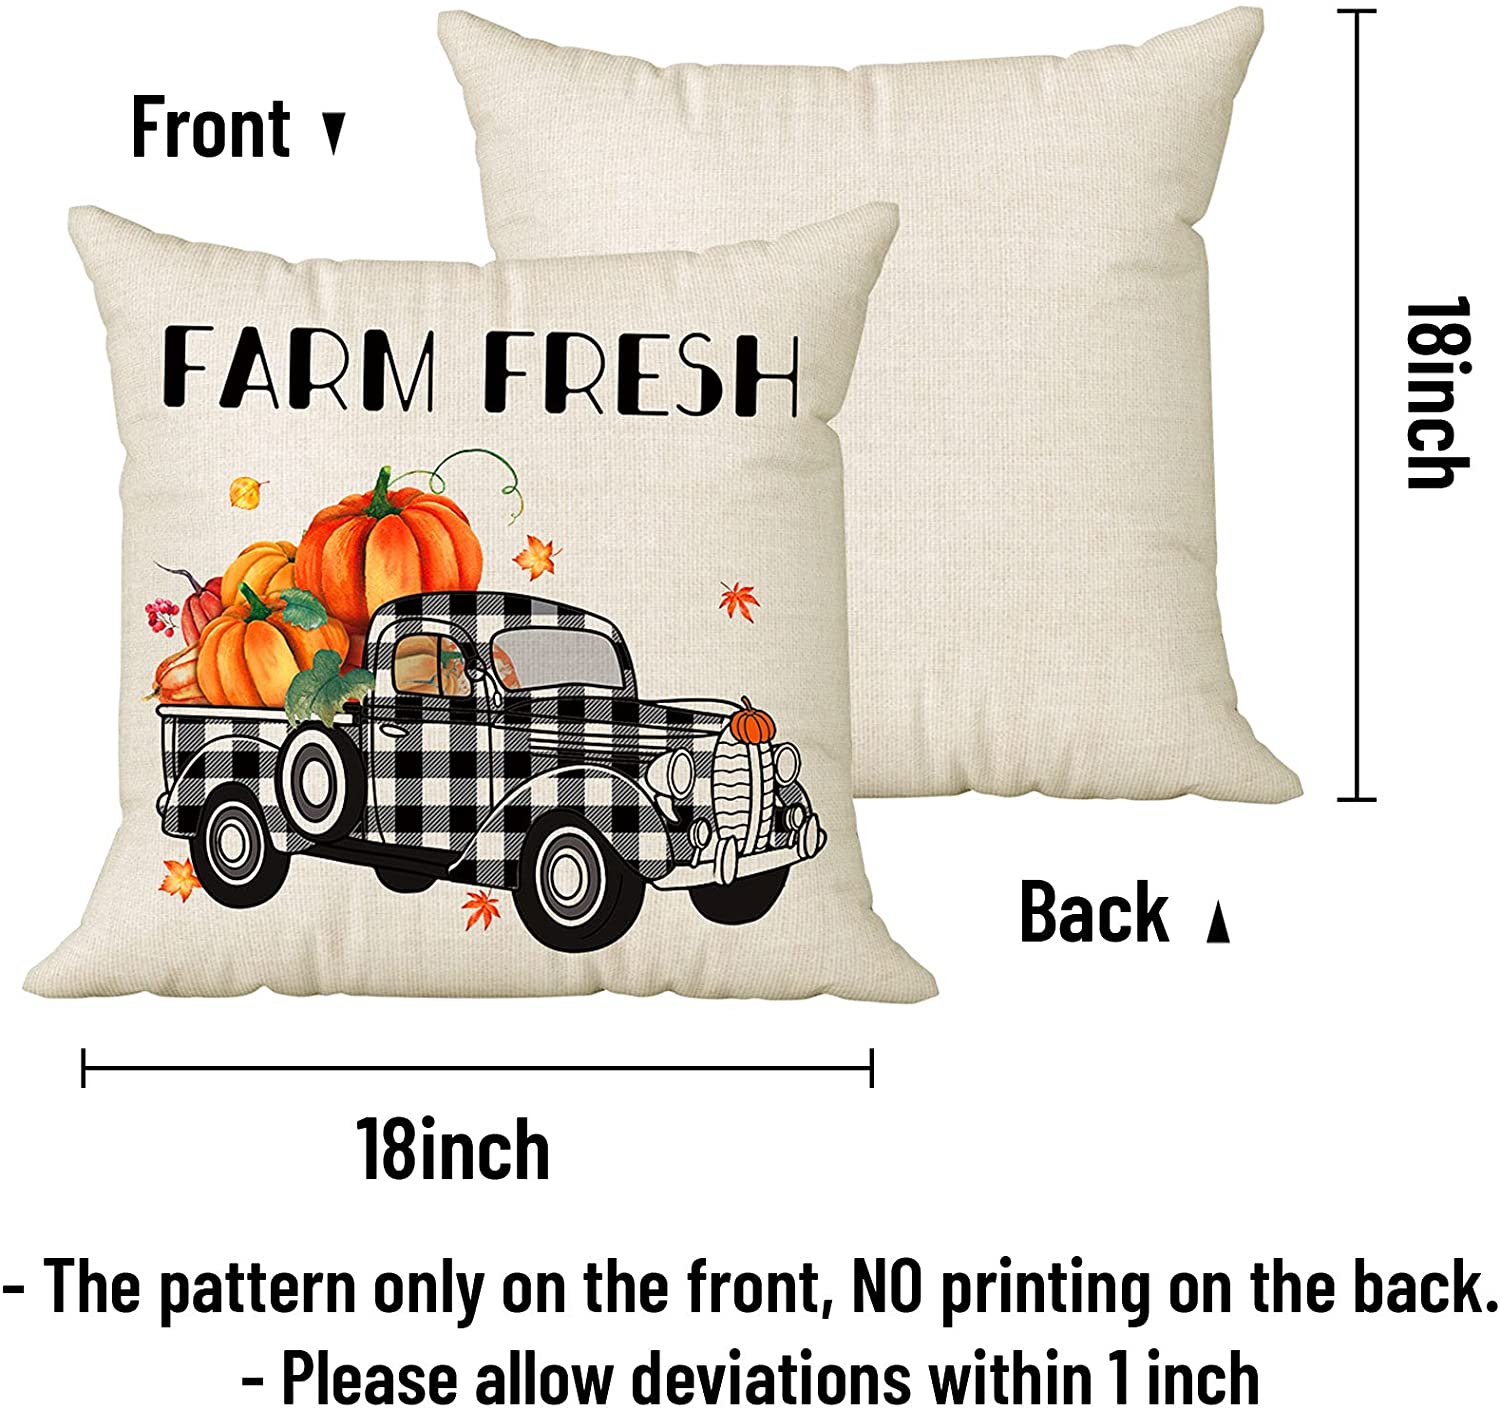 Set of 2 Buffalo Check Plaid Fall Pillow Covers 18 x 18 with 2 Bonus Coasters (Plaid, Truck)